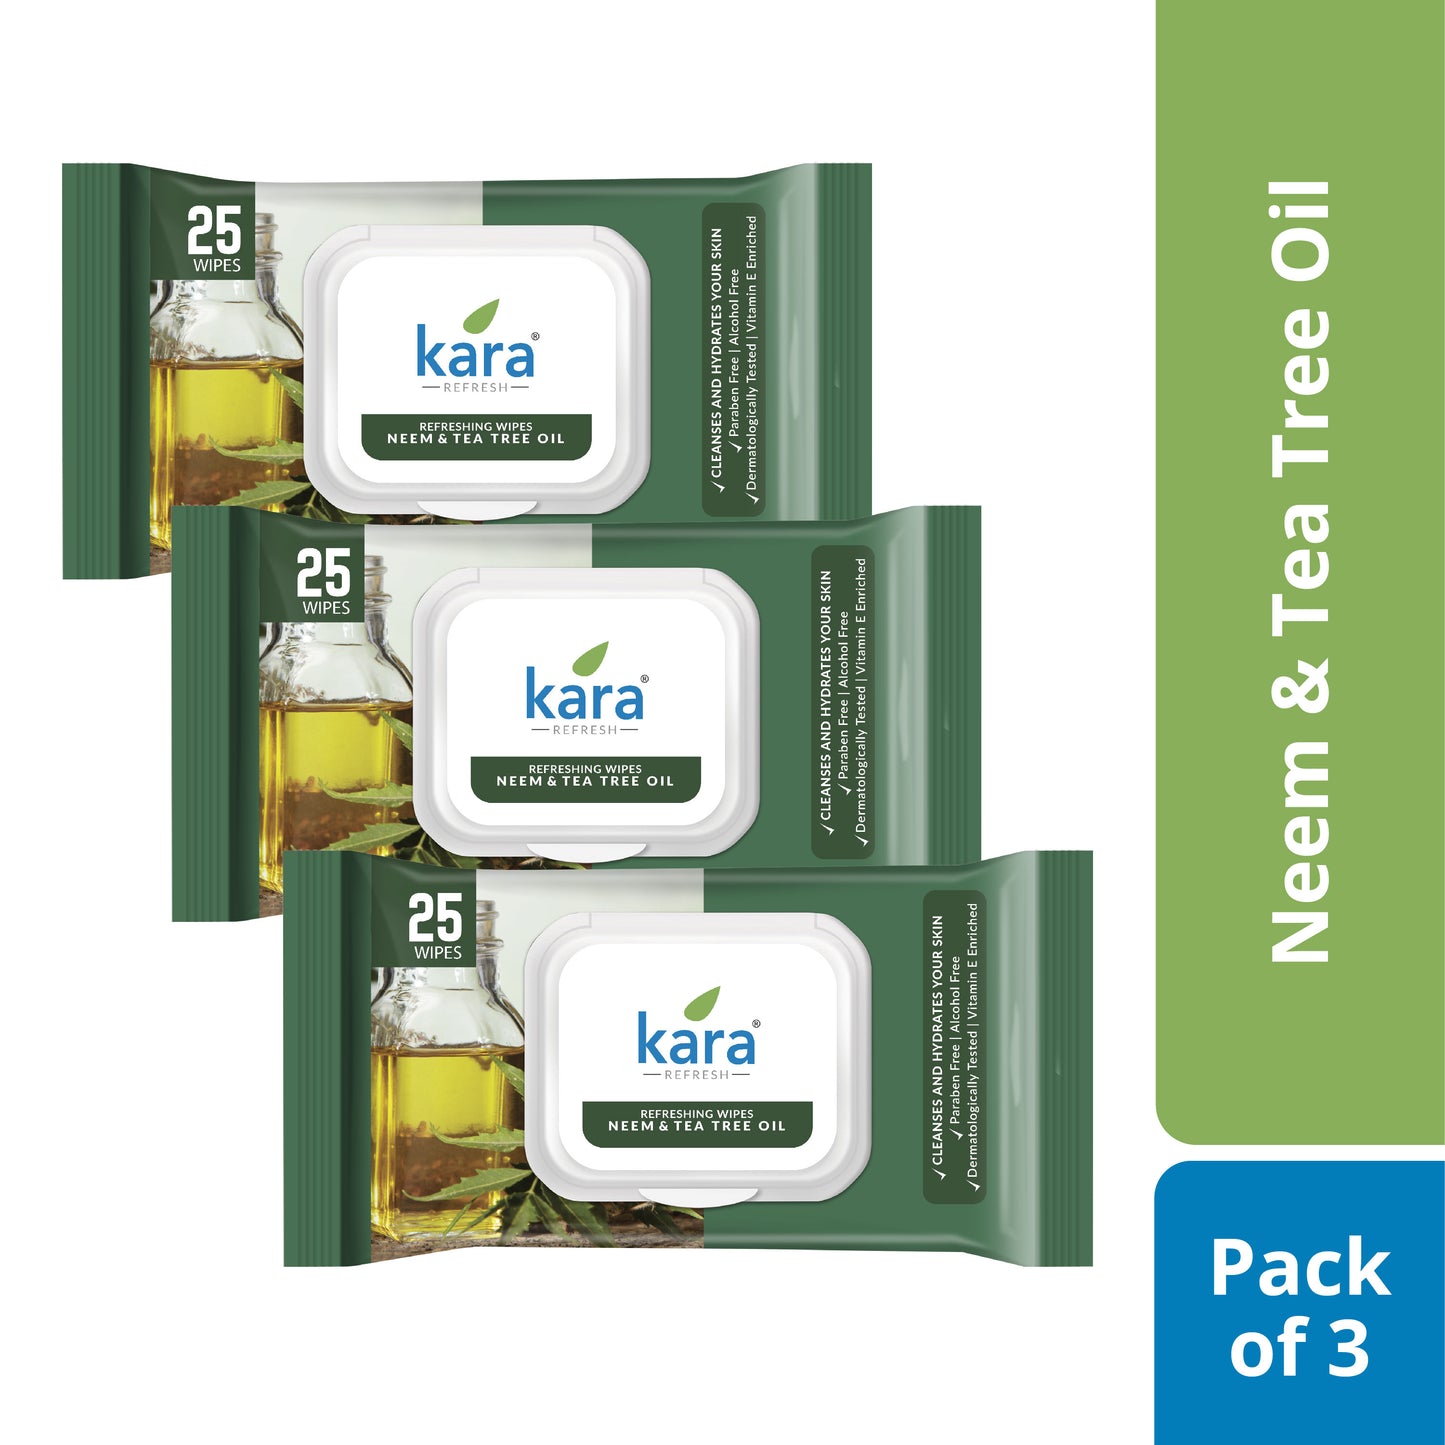 Kara Refreshing Wipes, Neem and Tea Tree Oil - Pack of 3 X 25 Wipes